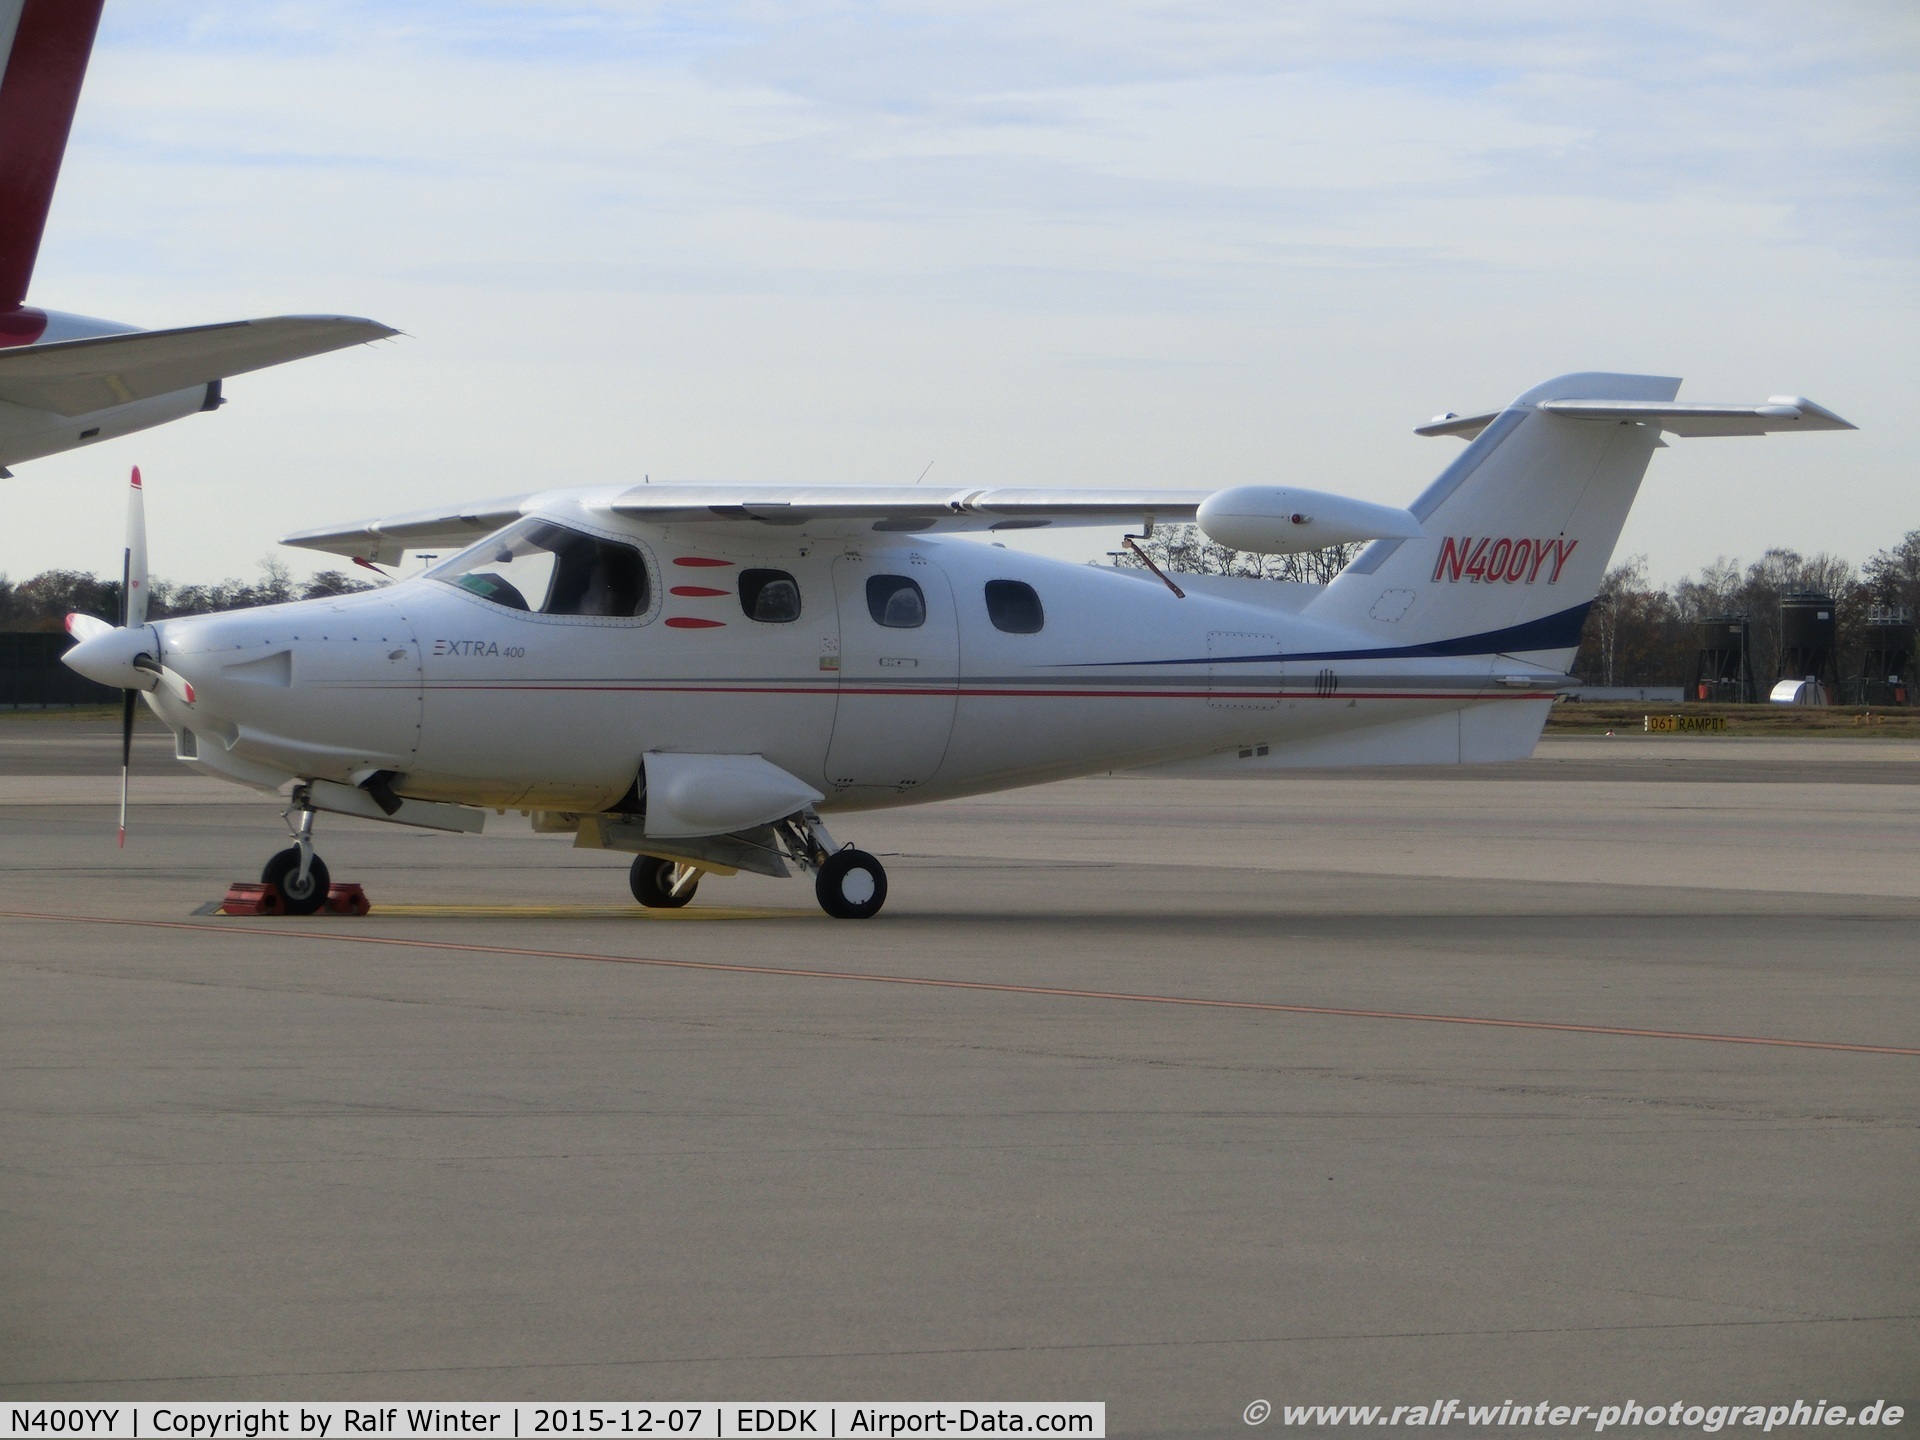 N400YY, 2001 Extra EA-400 C/N 019, Extra EA-400 - BAS Aviation Wilmington - 19 - N400YY - 07.12.2015 - CGN